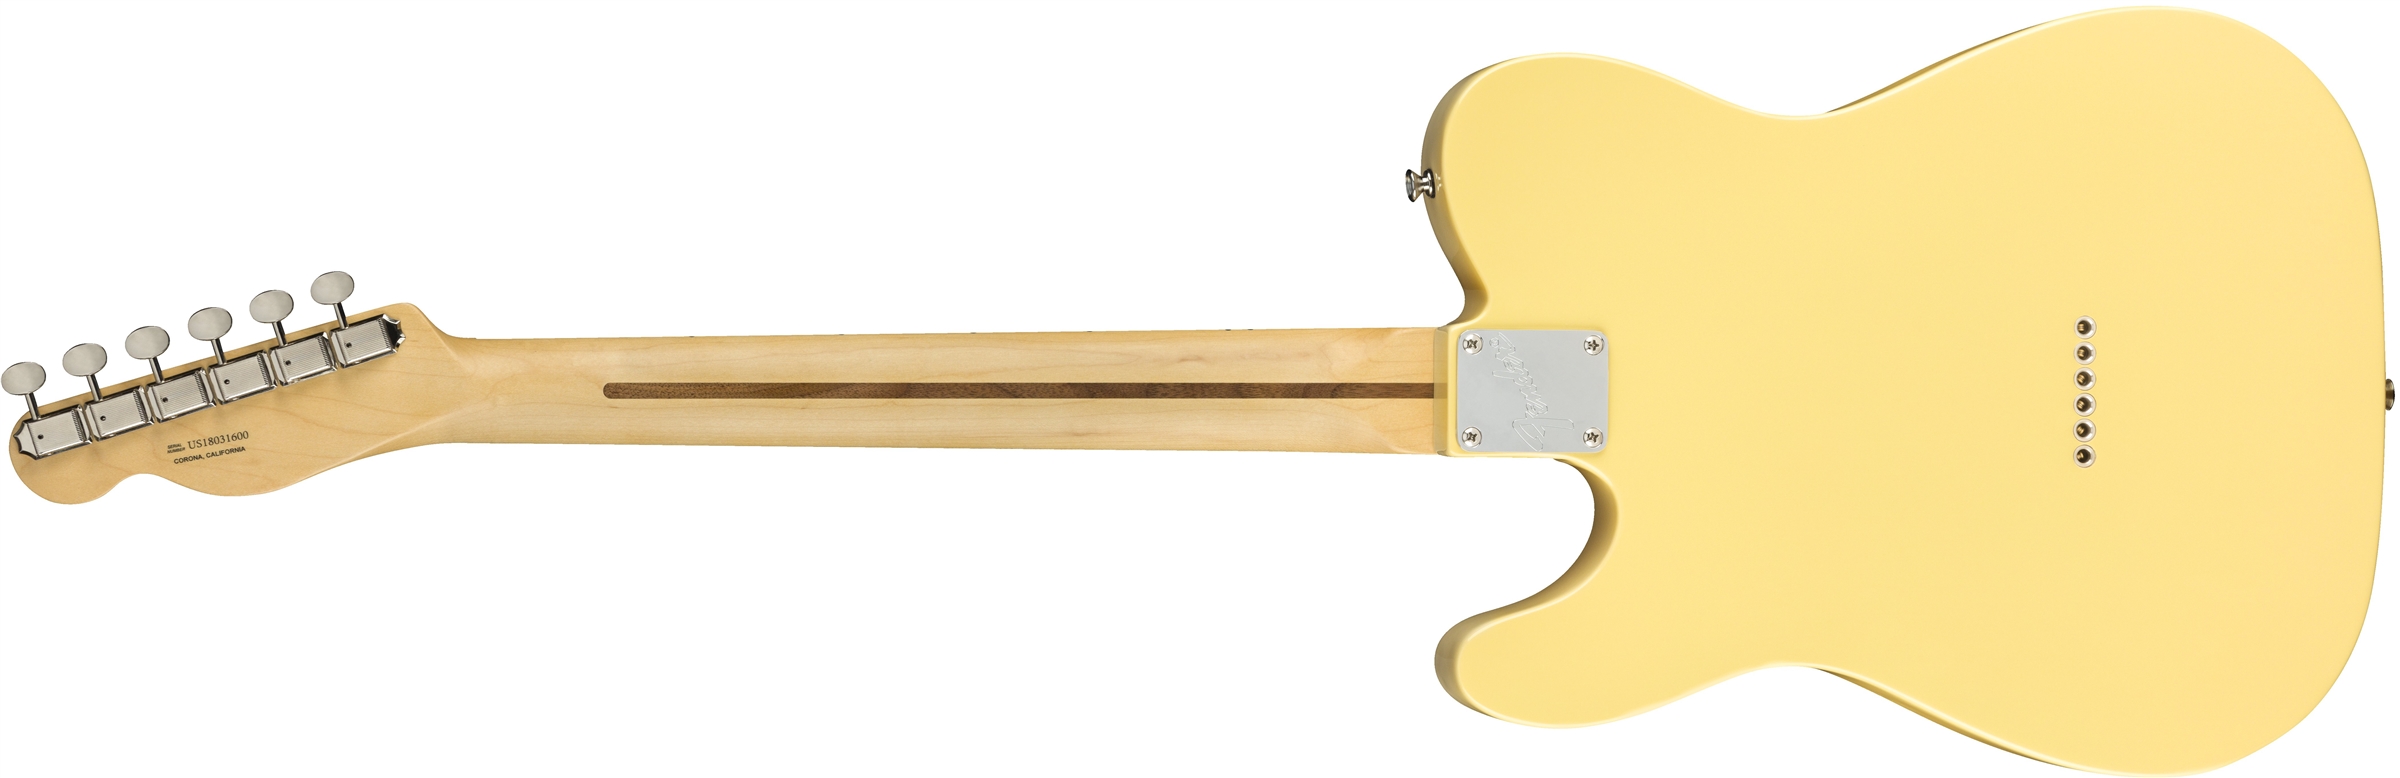 Fender Tele American Performer Usa Mn - Vintage White - Tel shape electric guitar - Variation 1